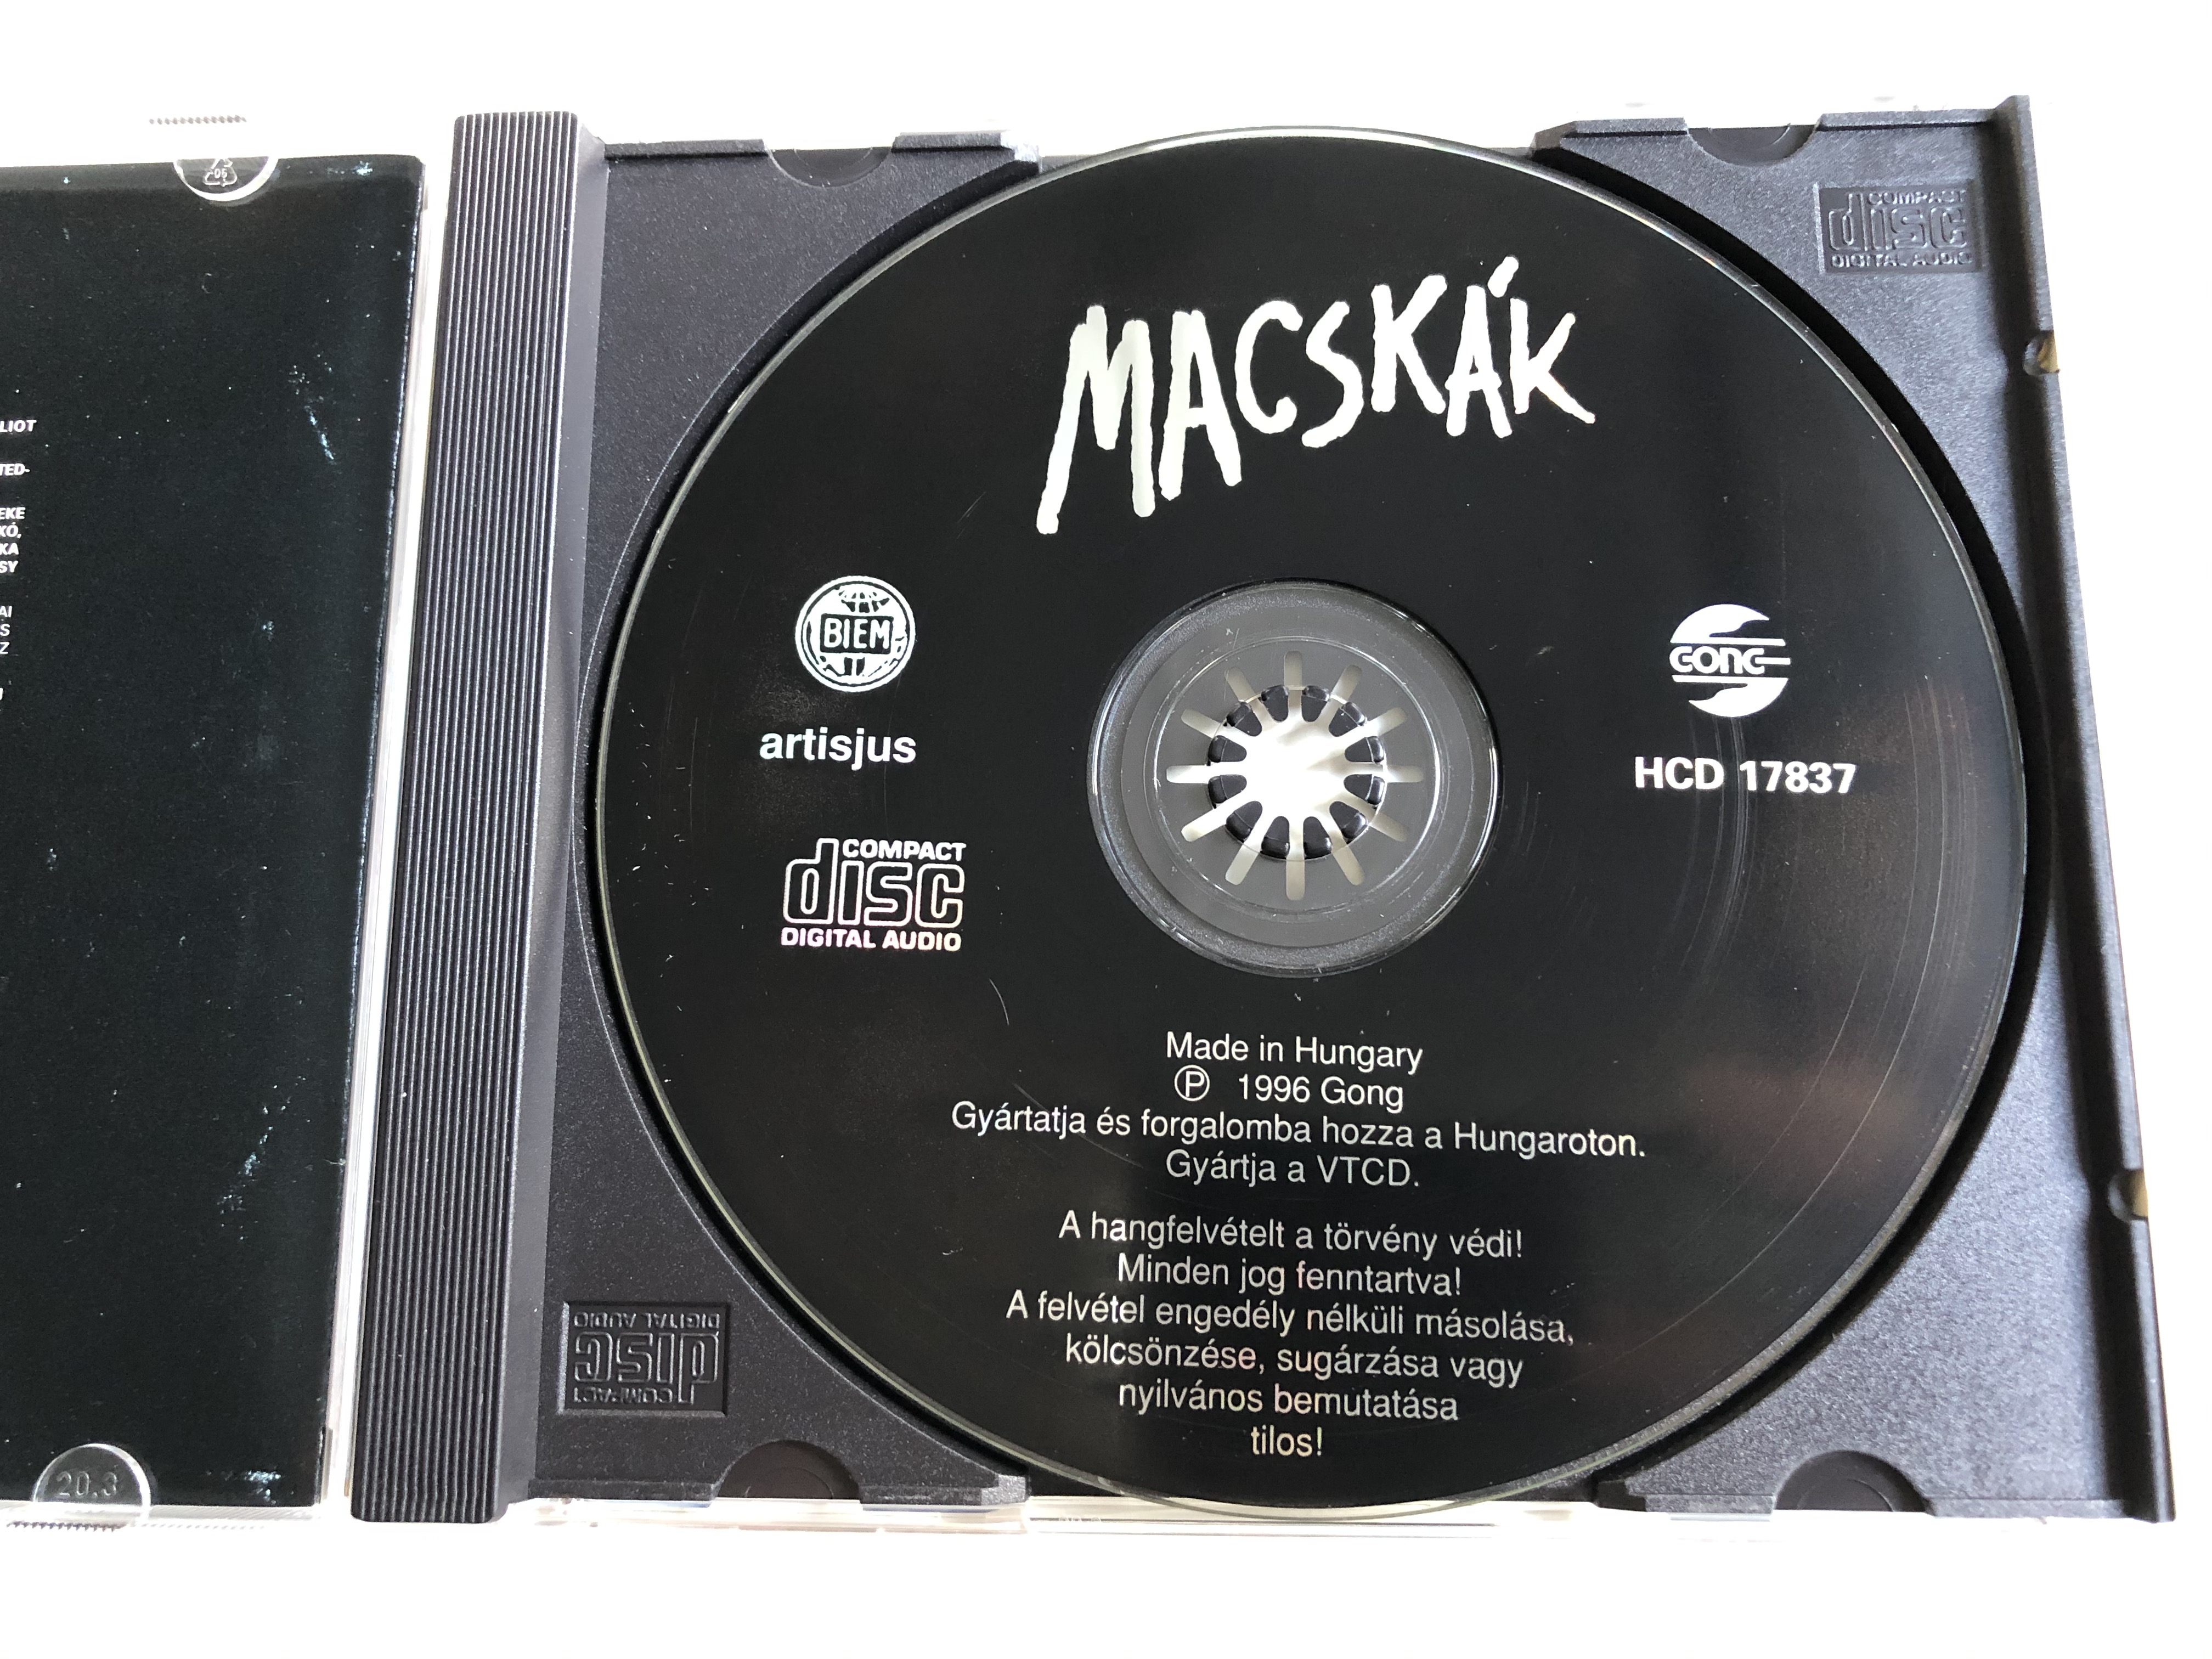 cats-zenes-reszletek-a-madach-szinhaz-macskak-eloadasabol-gong-audio-cd-1996-hcd-17837-4-.jpg